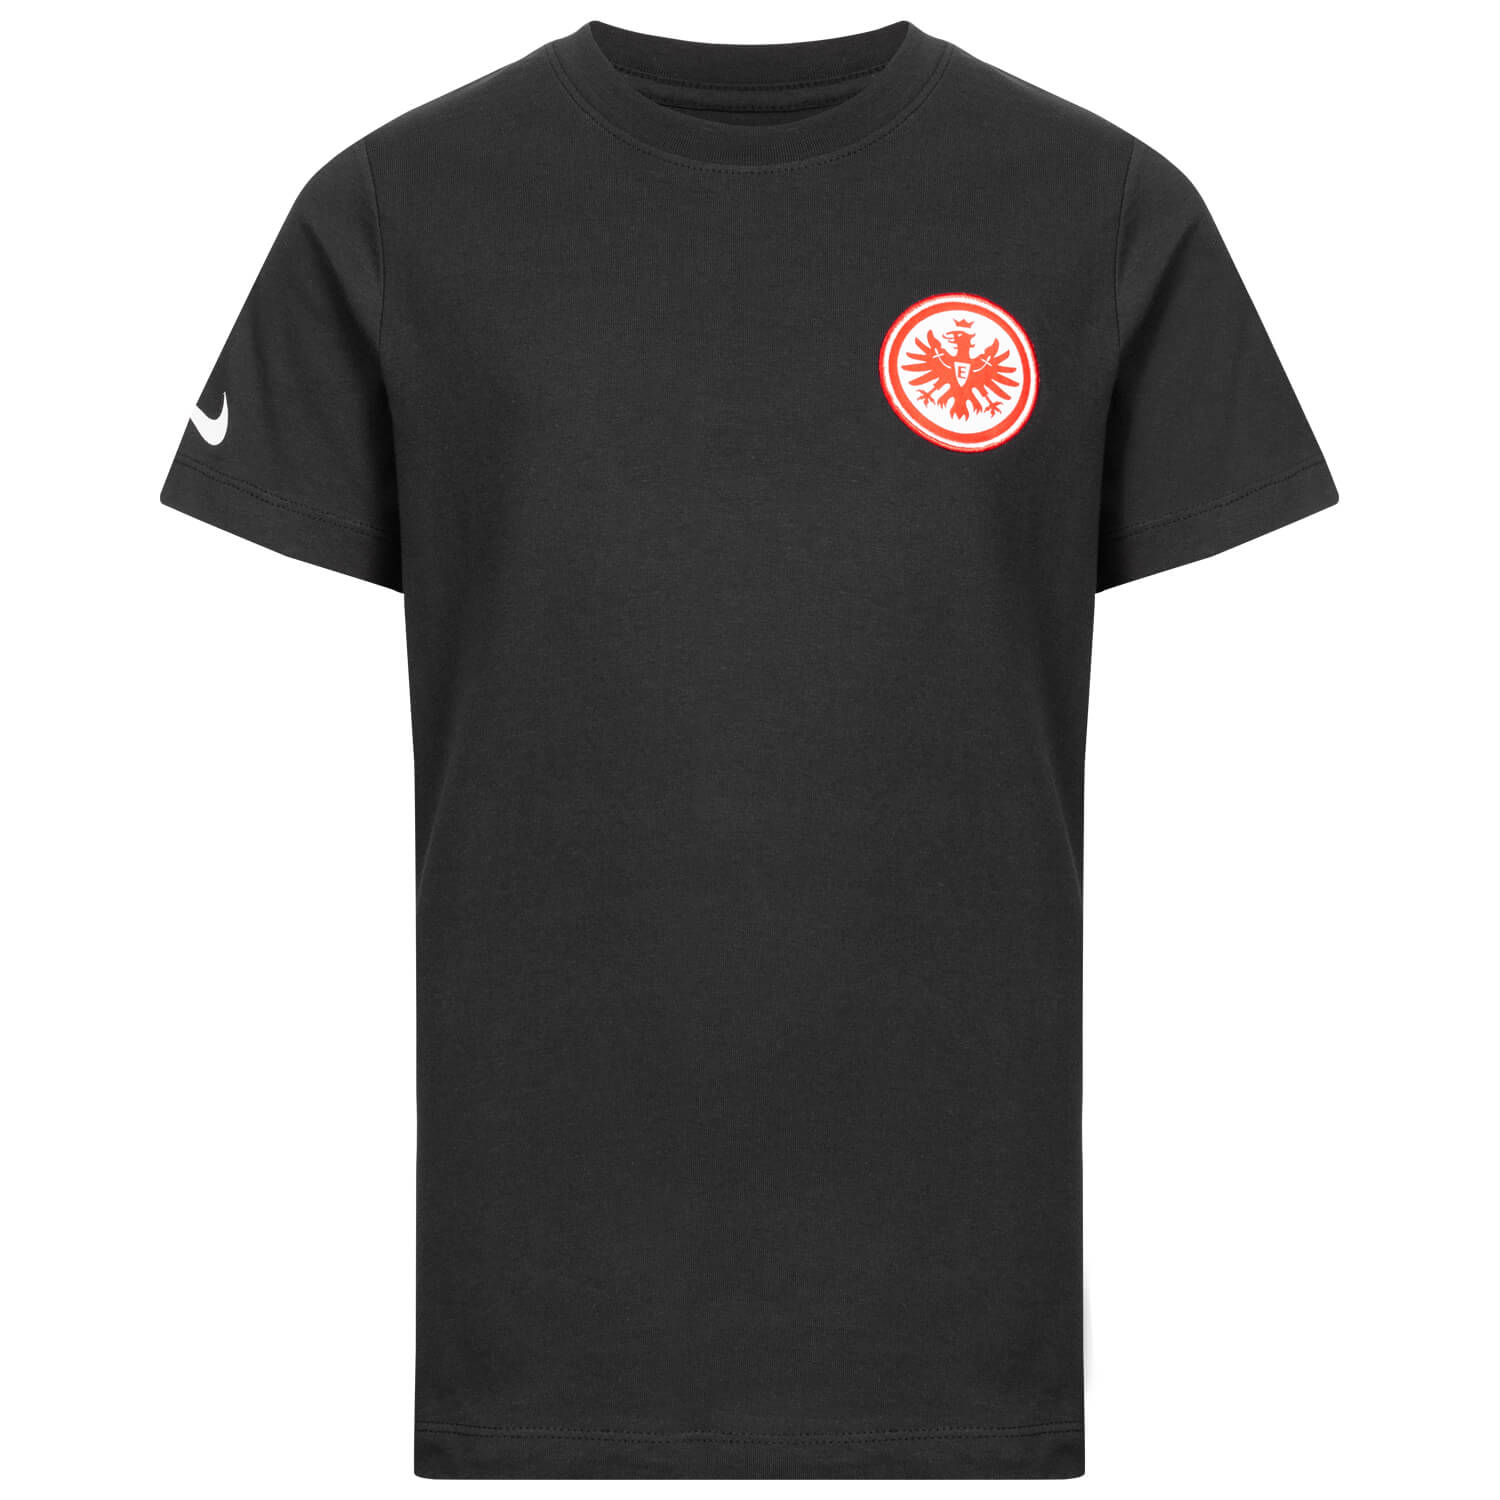 Bild 1: Nike Kids T-Shirt Basic schwarz